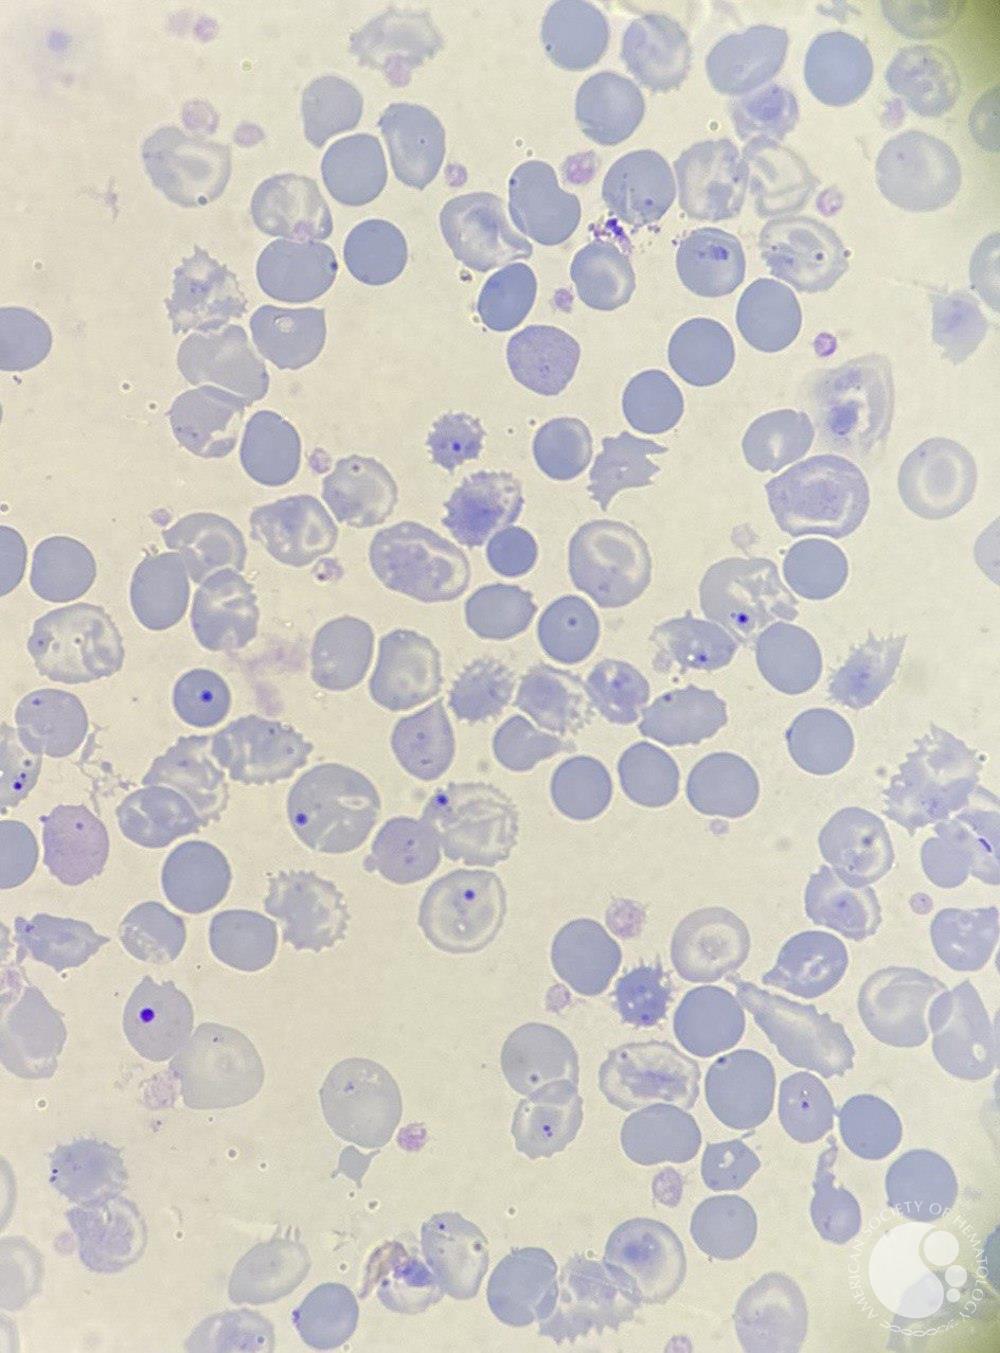 beta-thalassemia major